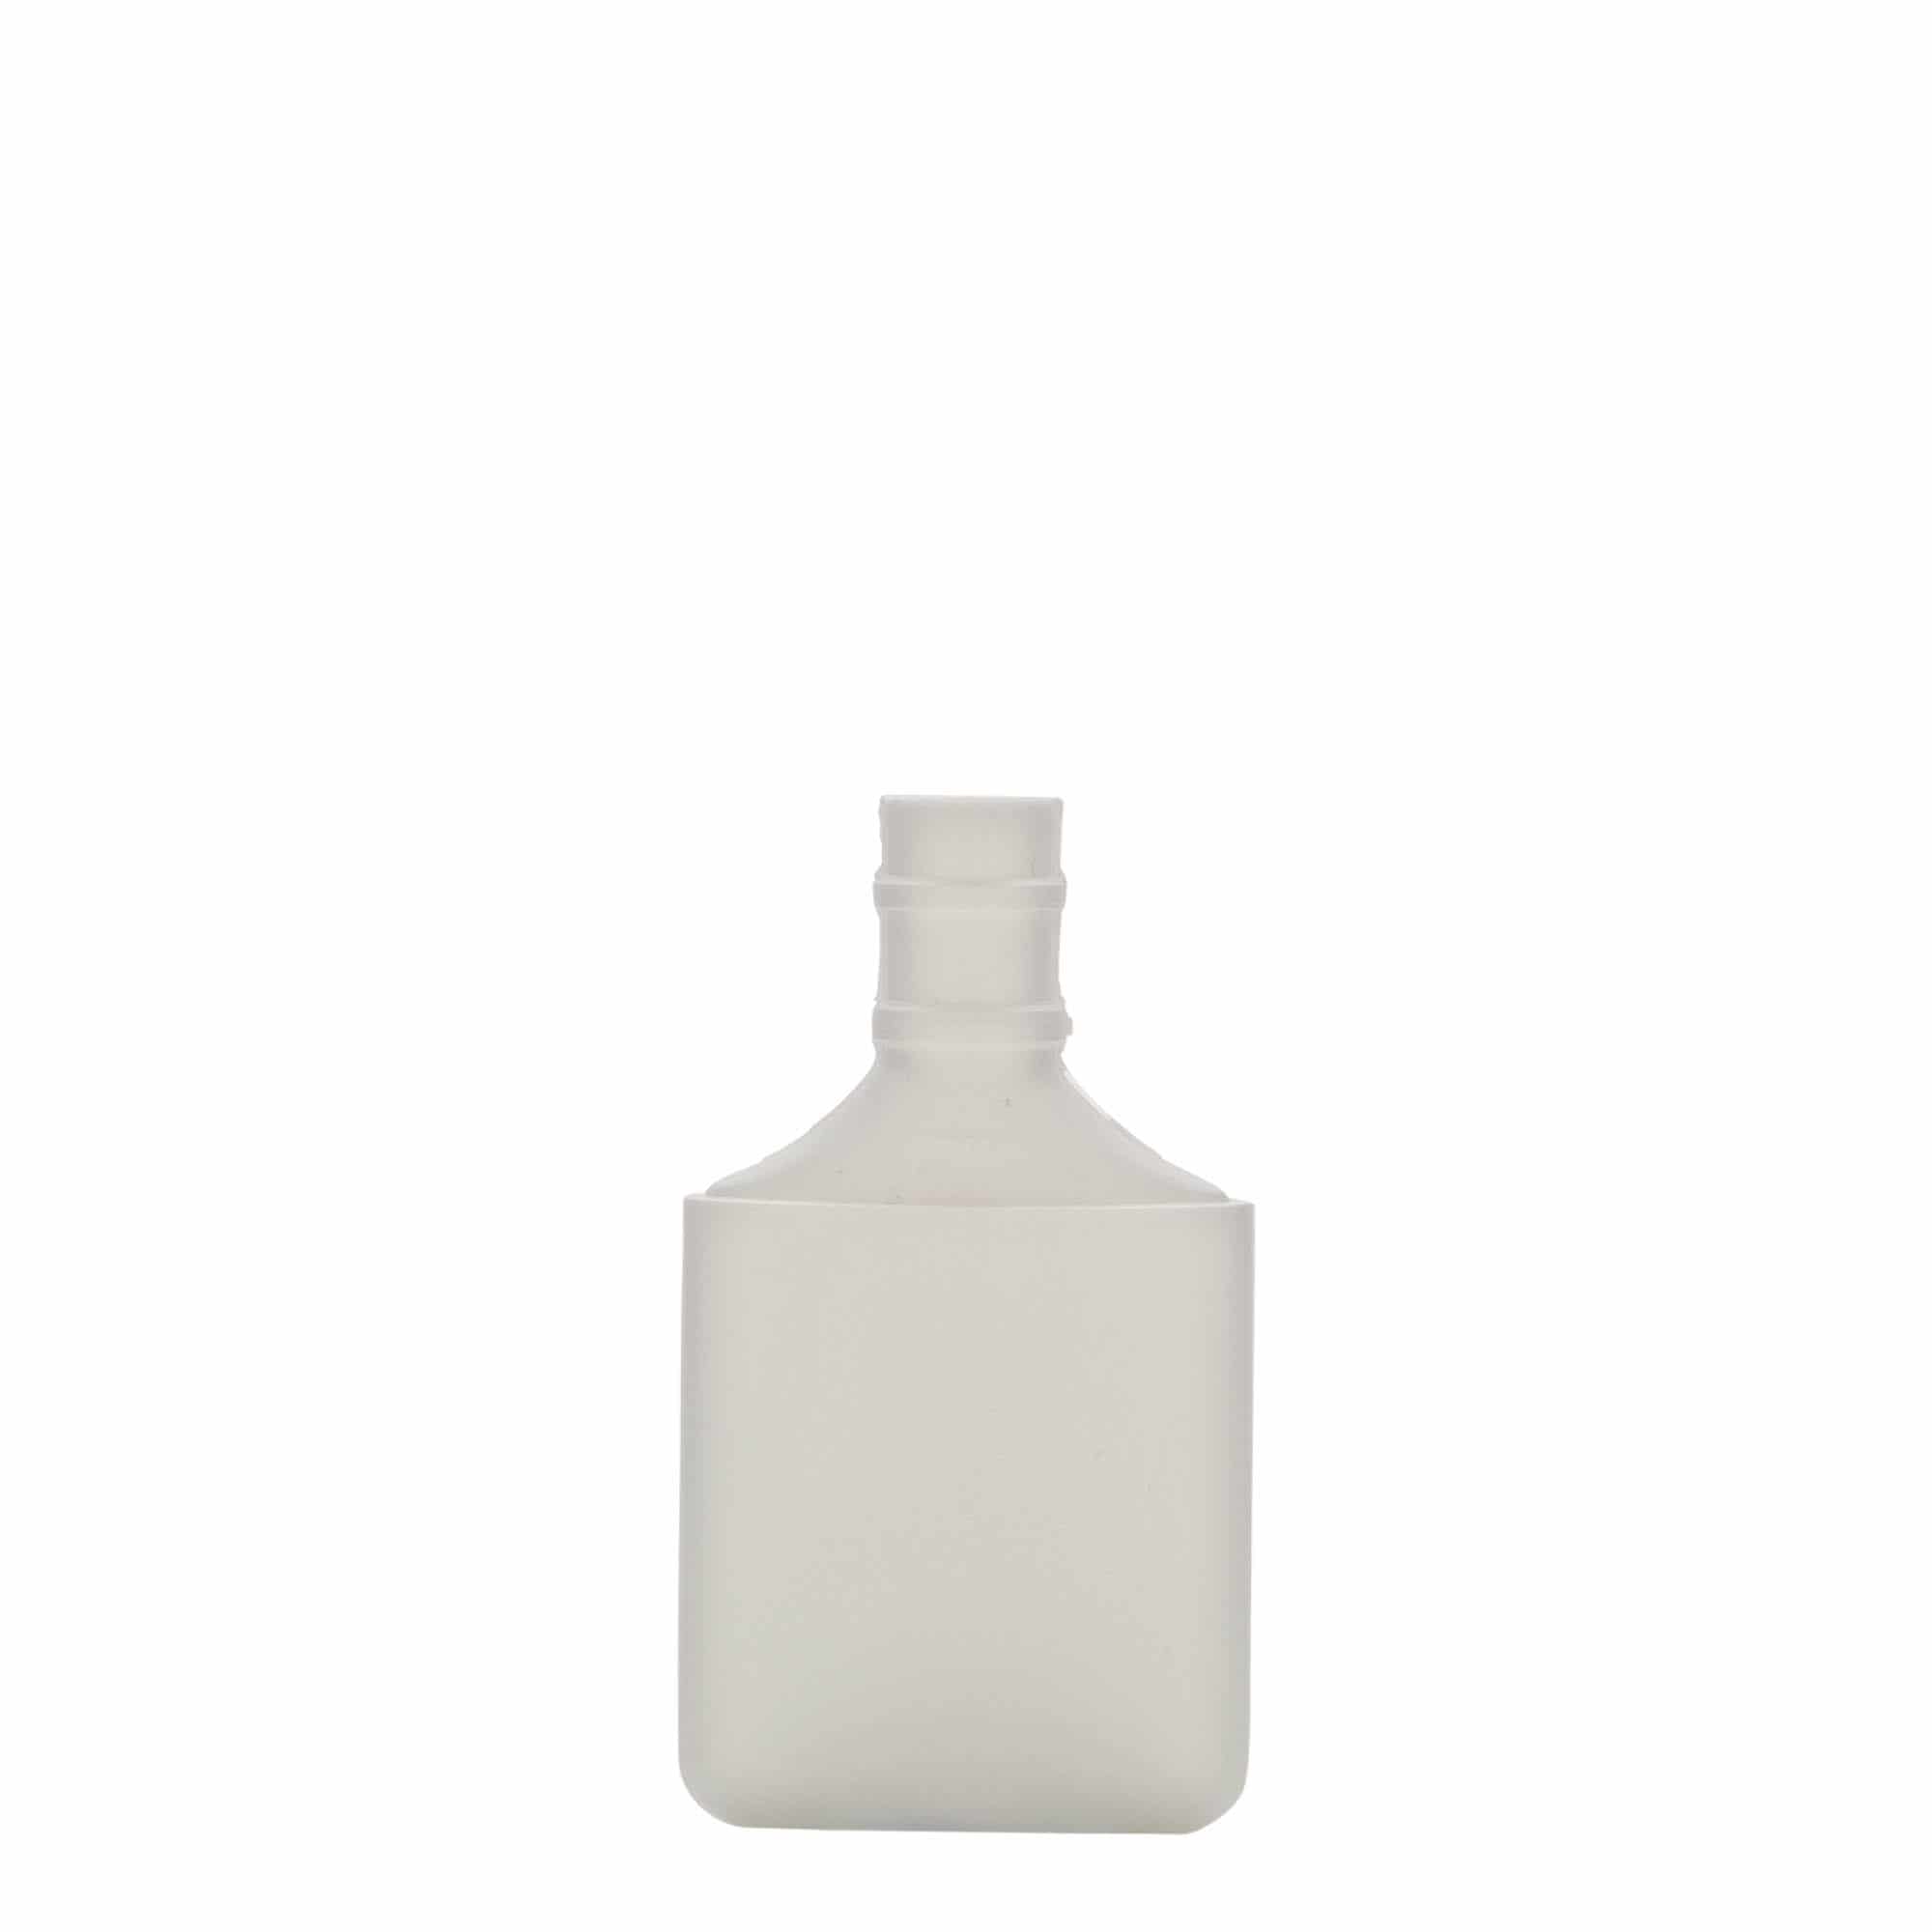 30 ml tube bottle, oval, HDPE plastic, white, closure: screw cap